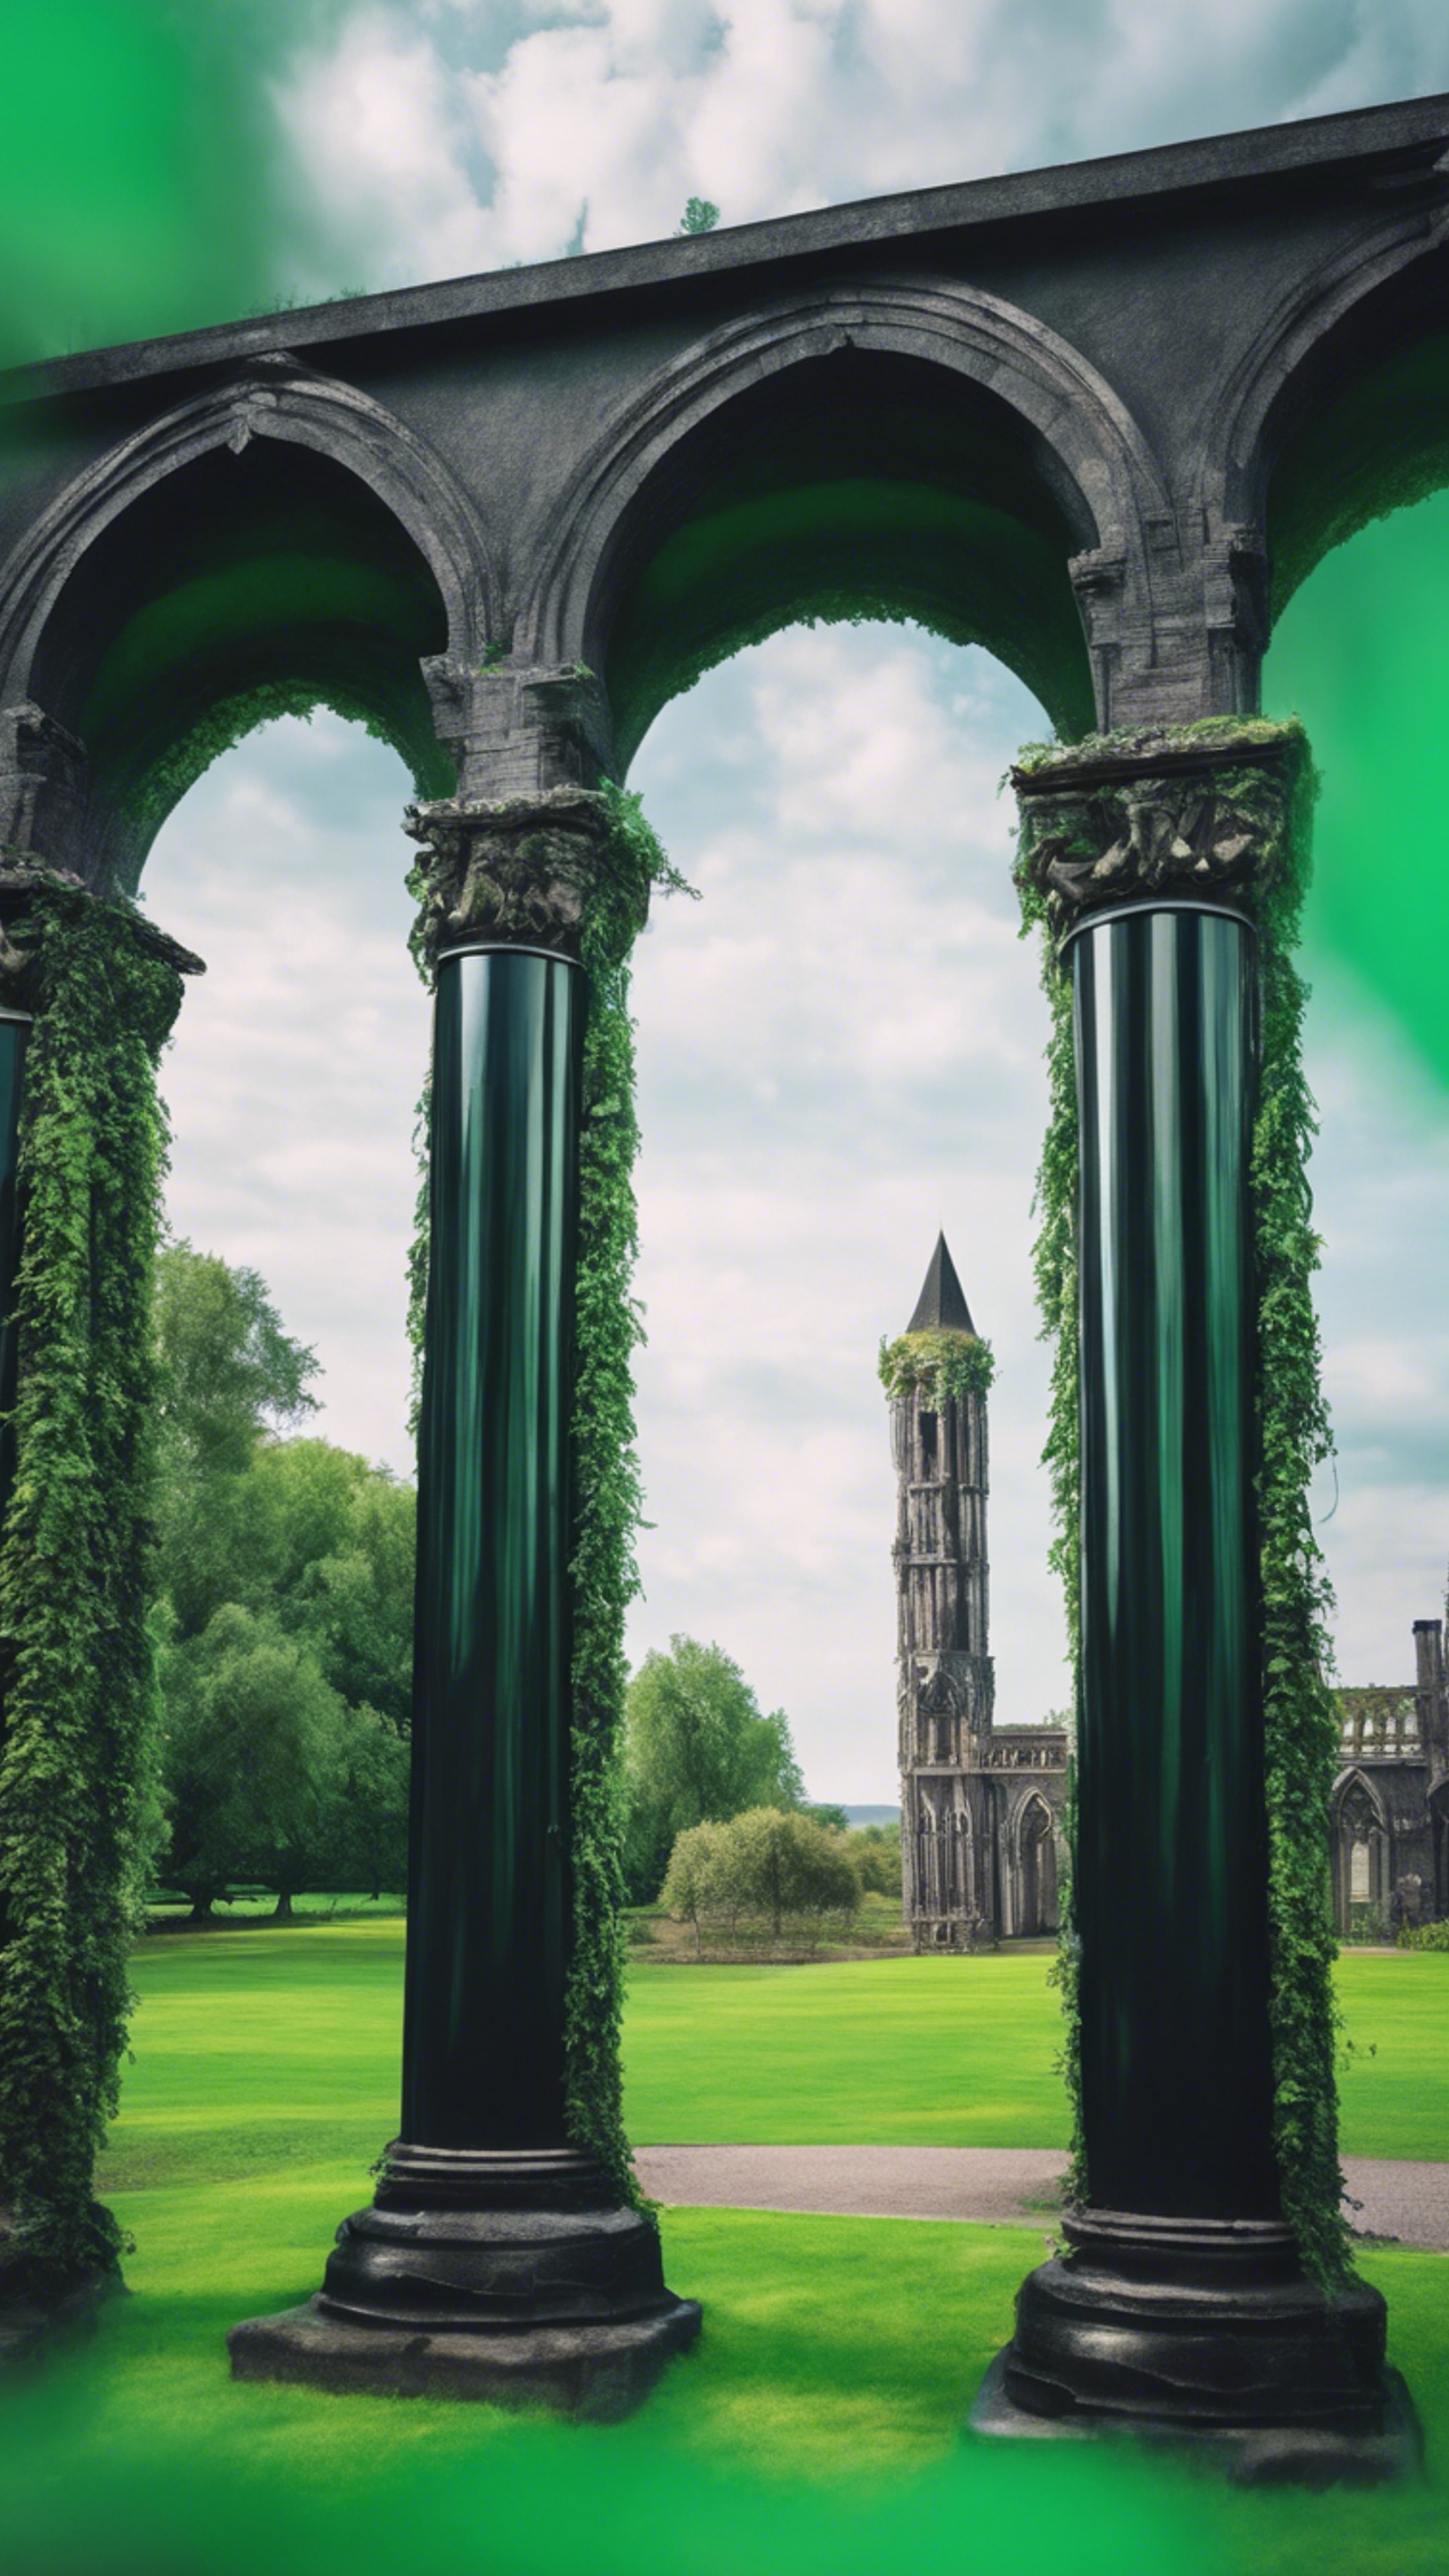 Dramatic black pillars of a gothic structure against a vibrant green background. Wallpaper[e6ecc8271c0847059e9c]